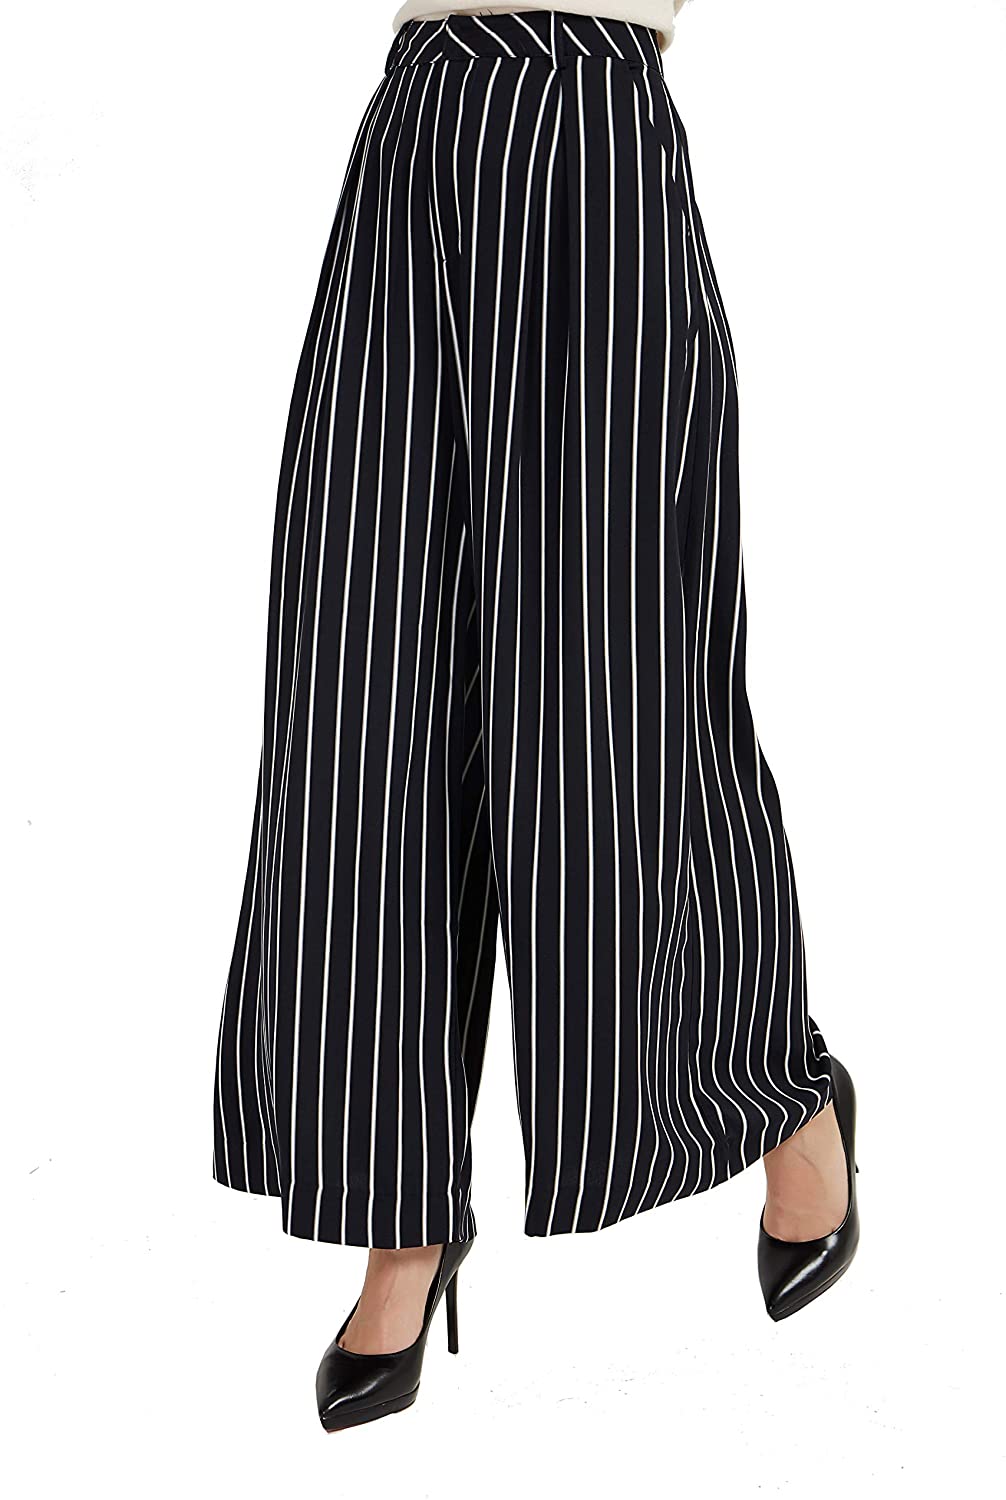 Buy Tronjori Women High Waist Casual Wide Leg Long Palazzo Pants Trousers  Regular Size, Brown Short, X-Small Short at .in